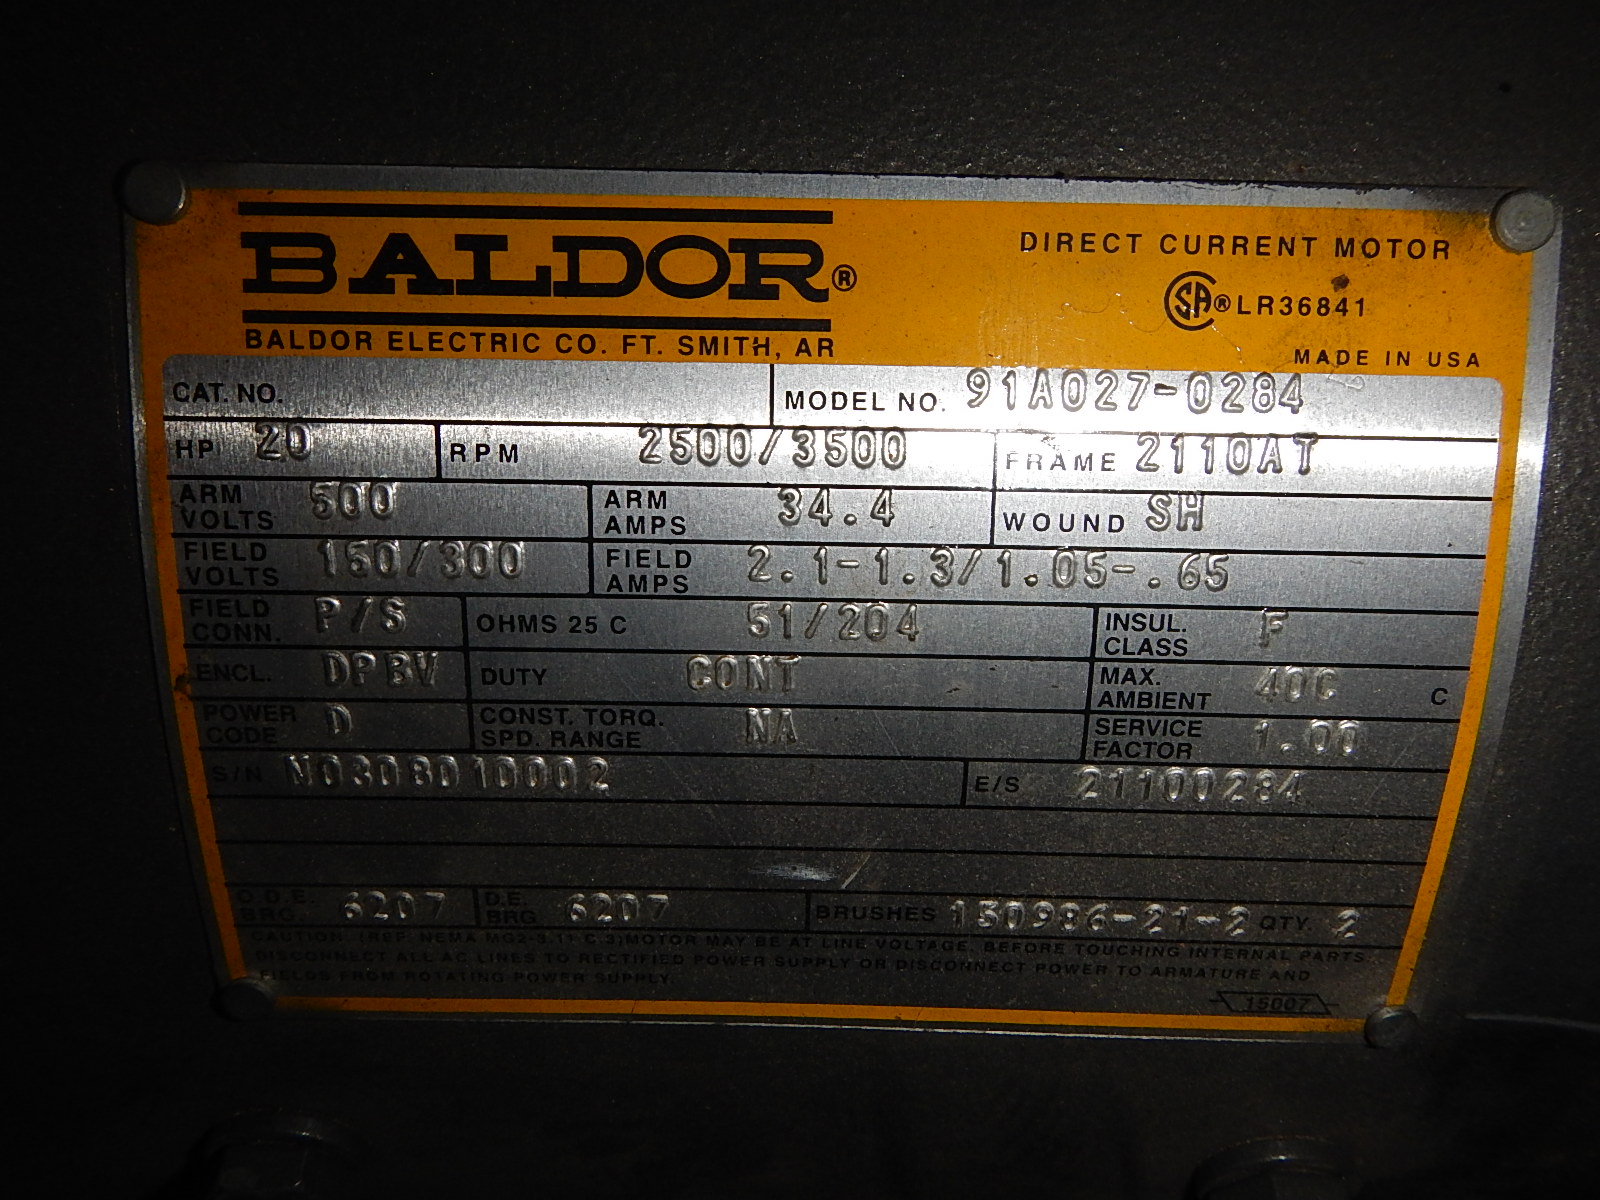 Baldor 20 HP 2500/3500 RPM 2110ATC DC Motors 73603